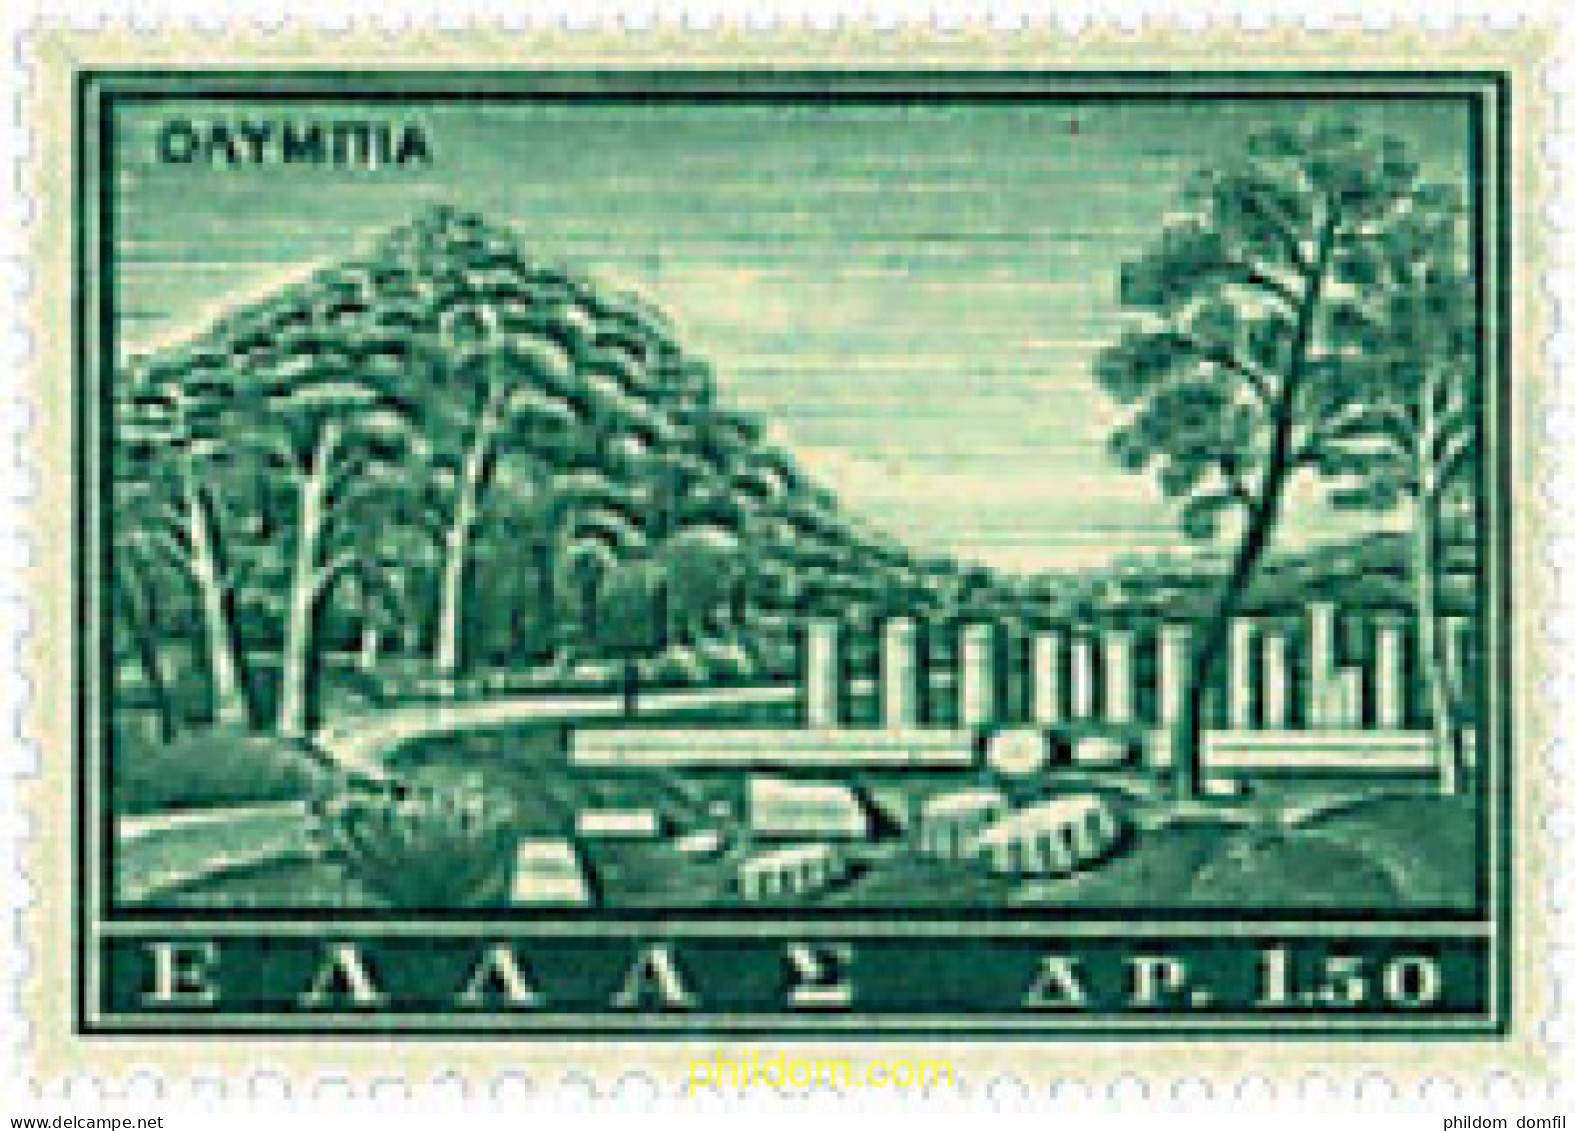 212810 MNH GRECIA 1961 TURISMO. MOTIVOS VARIOS - Unused Stamps